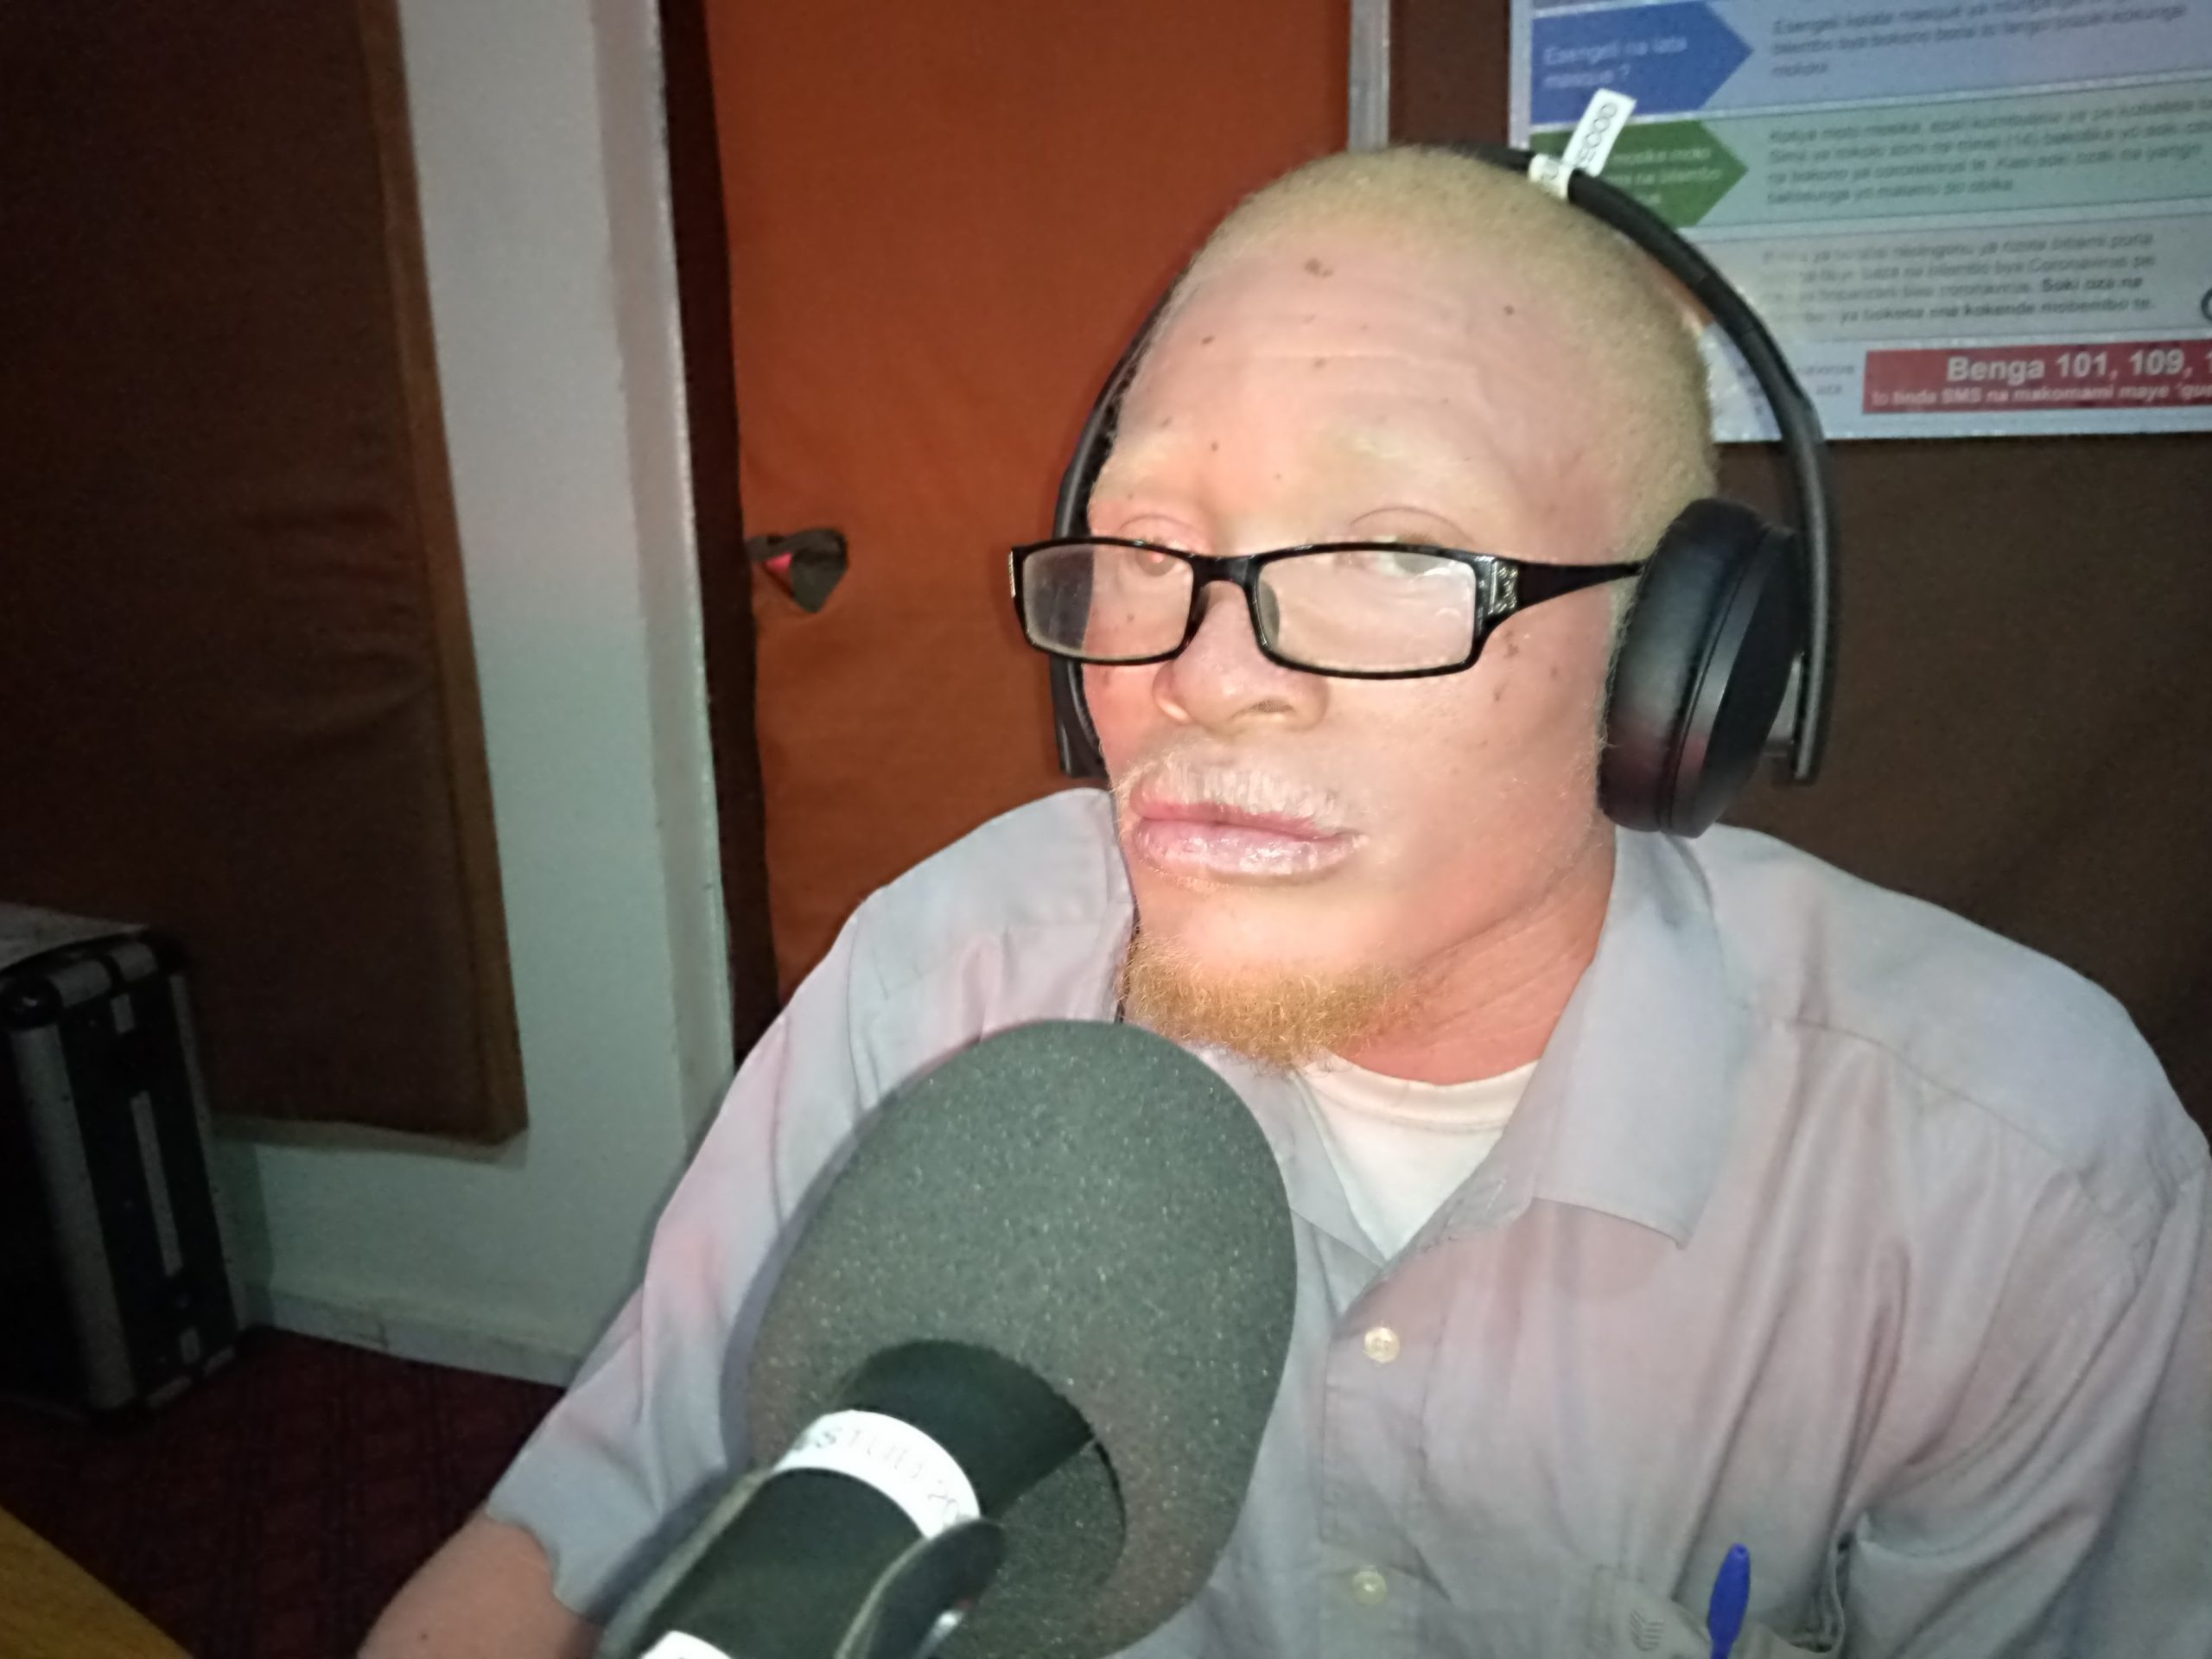 Kananga : Patrick Théodore MUTSHIPAYI vulgarise les droits des albinos